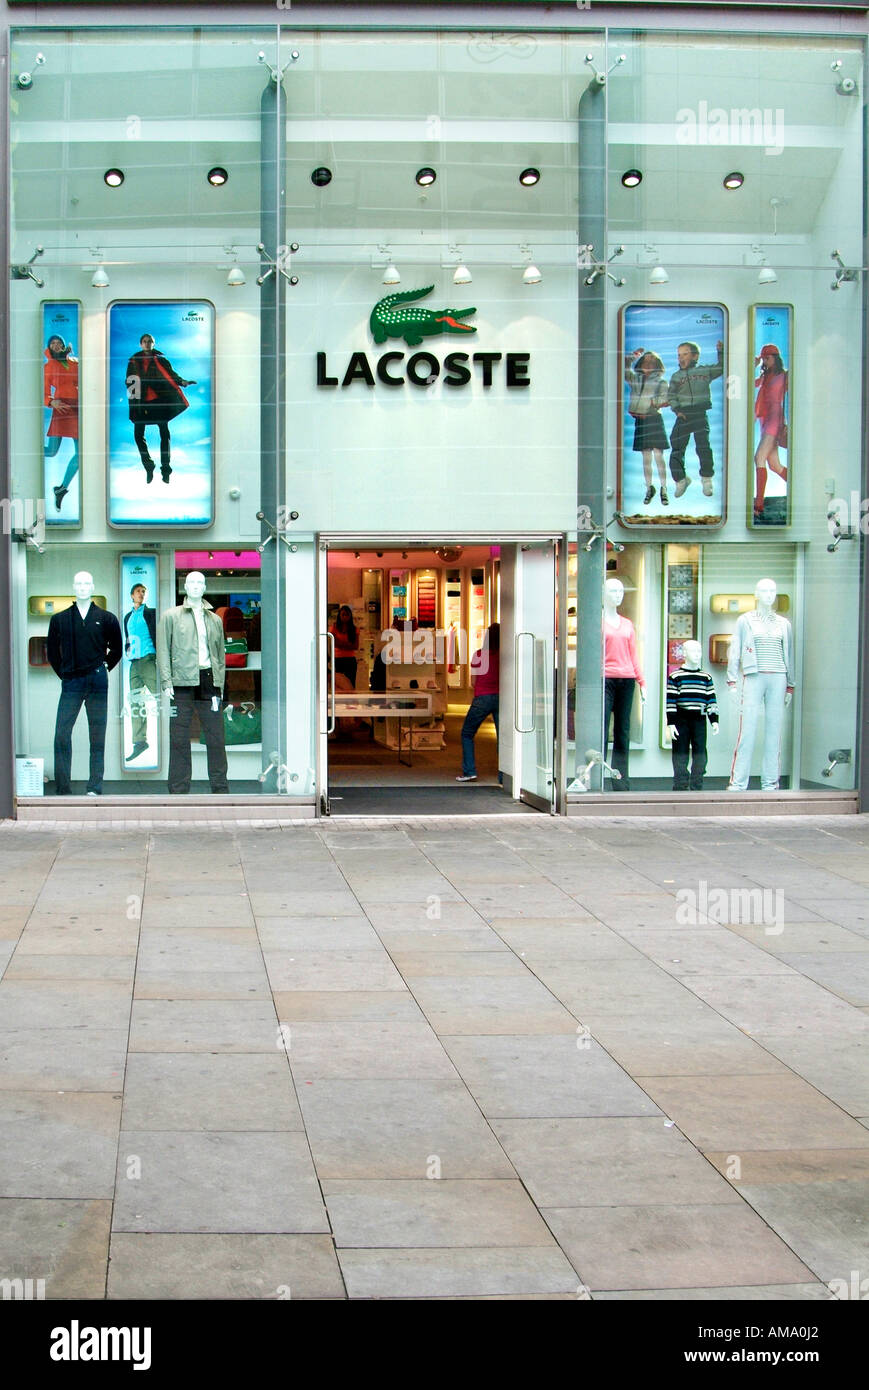 Lacoste front Department store retail UK United Kingdom England Europe GB Great Britain EU European Union Stock Photo - Alamy